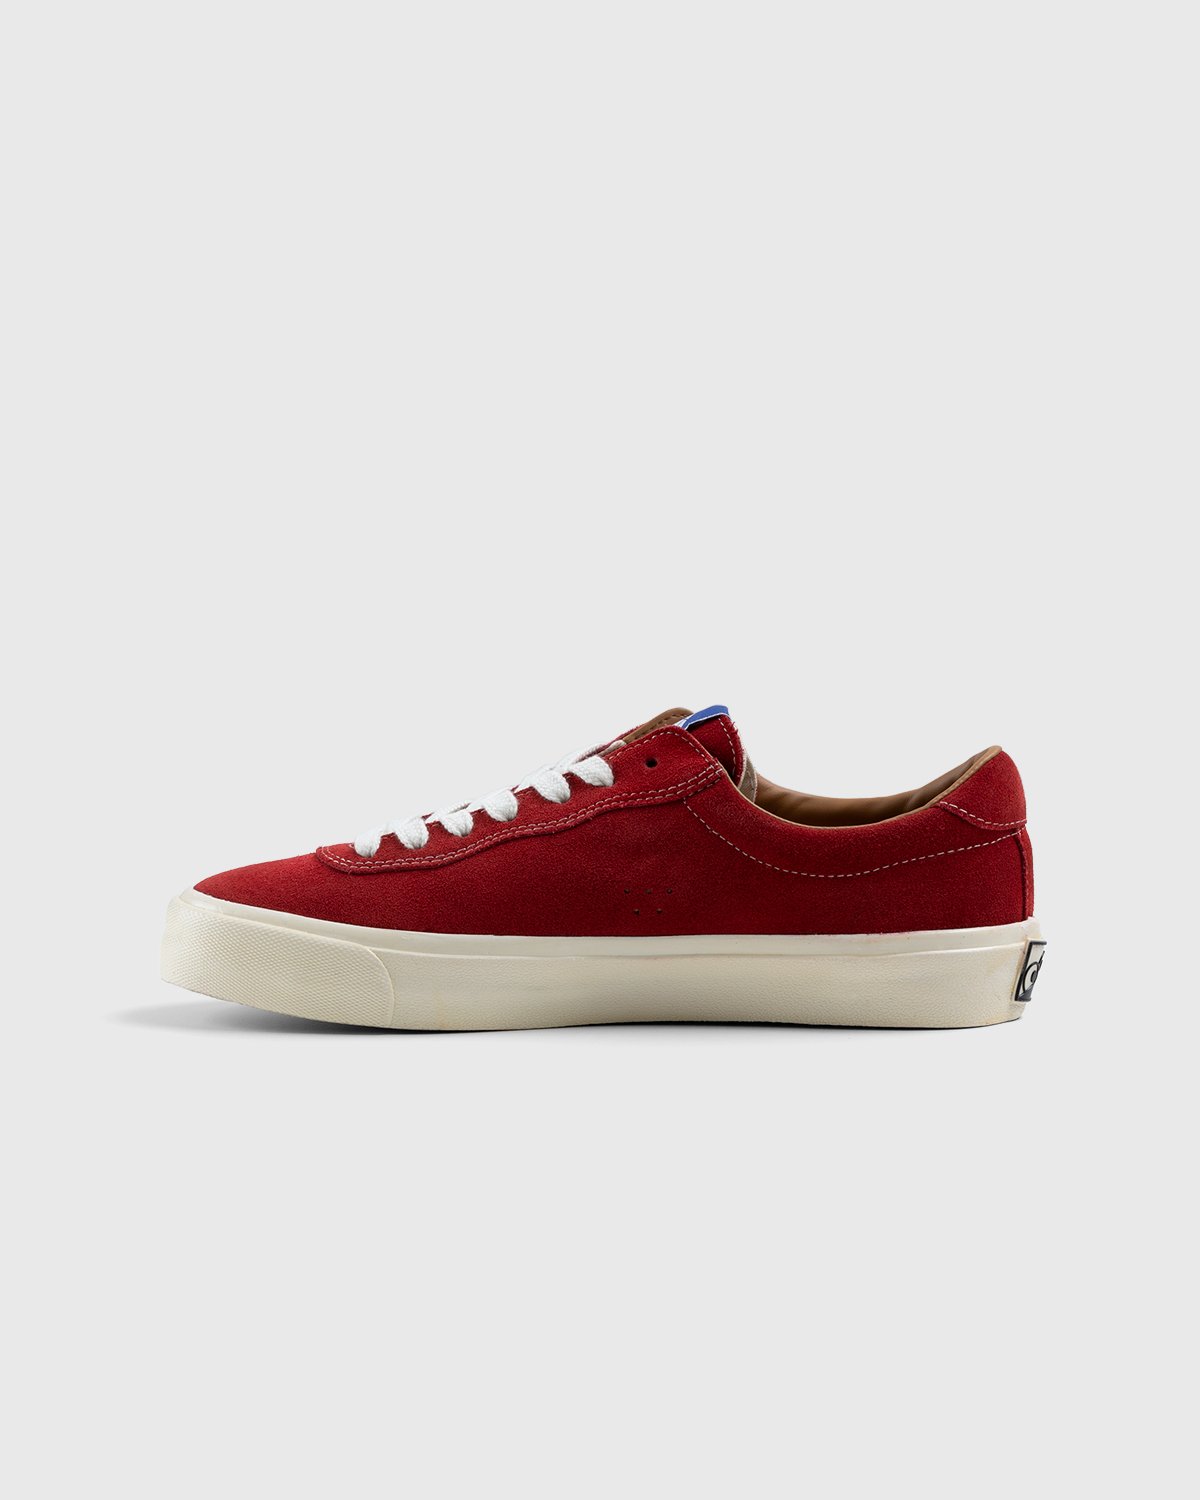 Last Resort AB - VM001 Lo Suede Old Red/White - Footwear - Red - Image 2